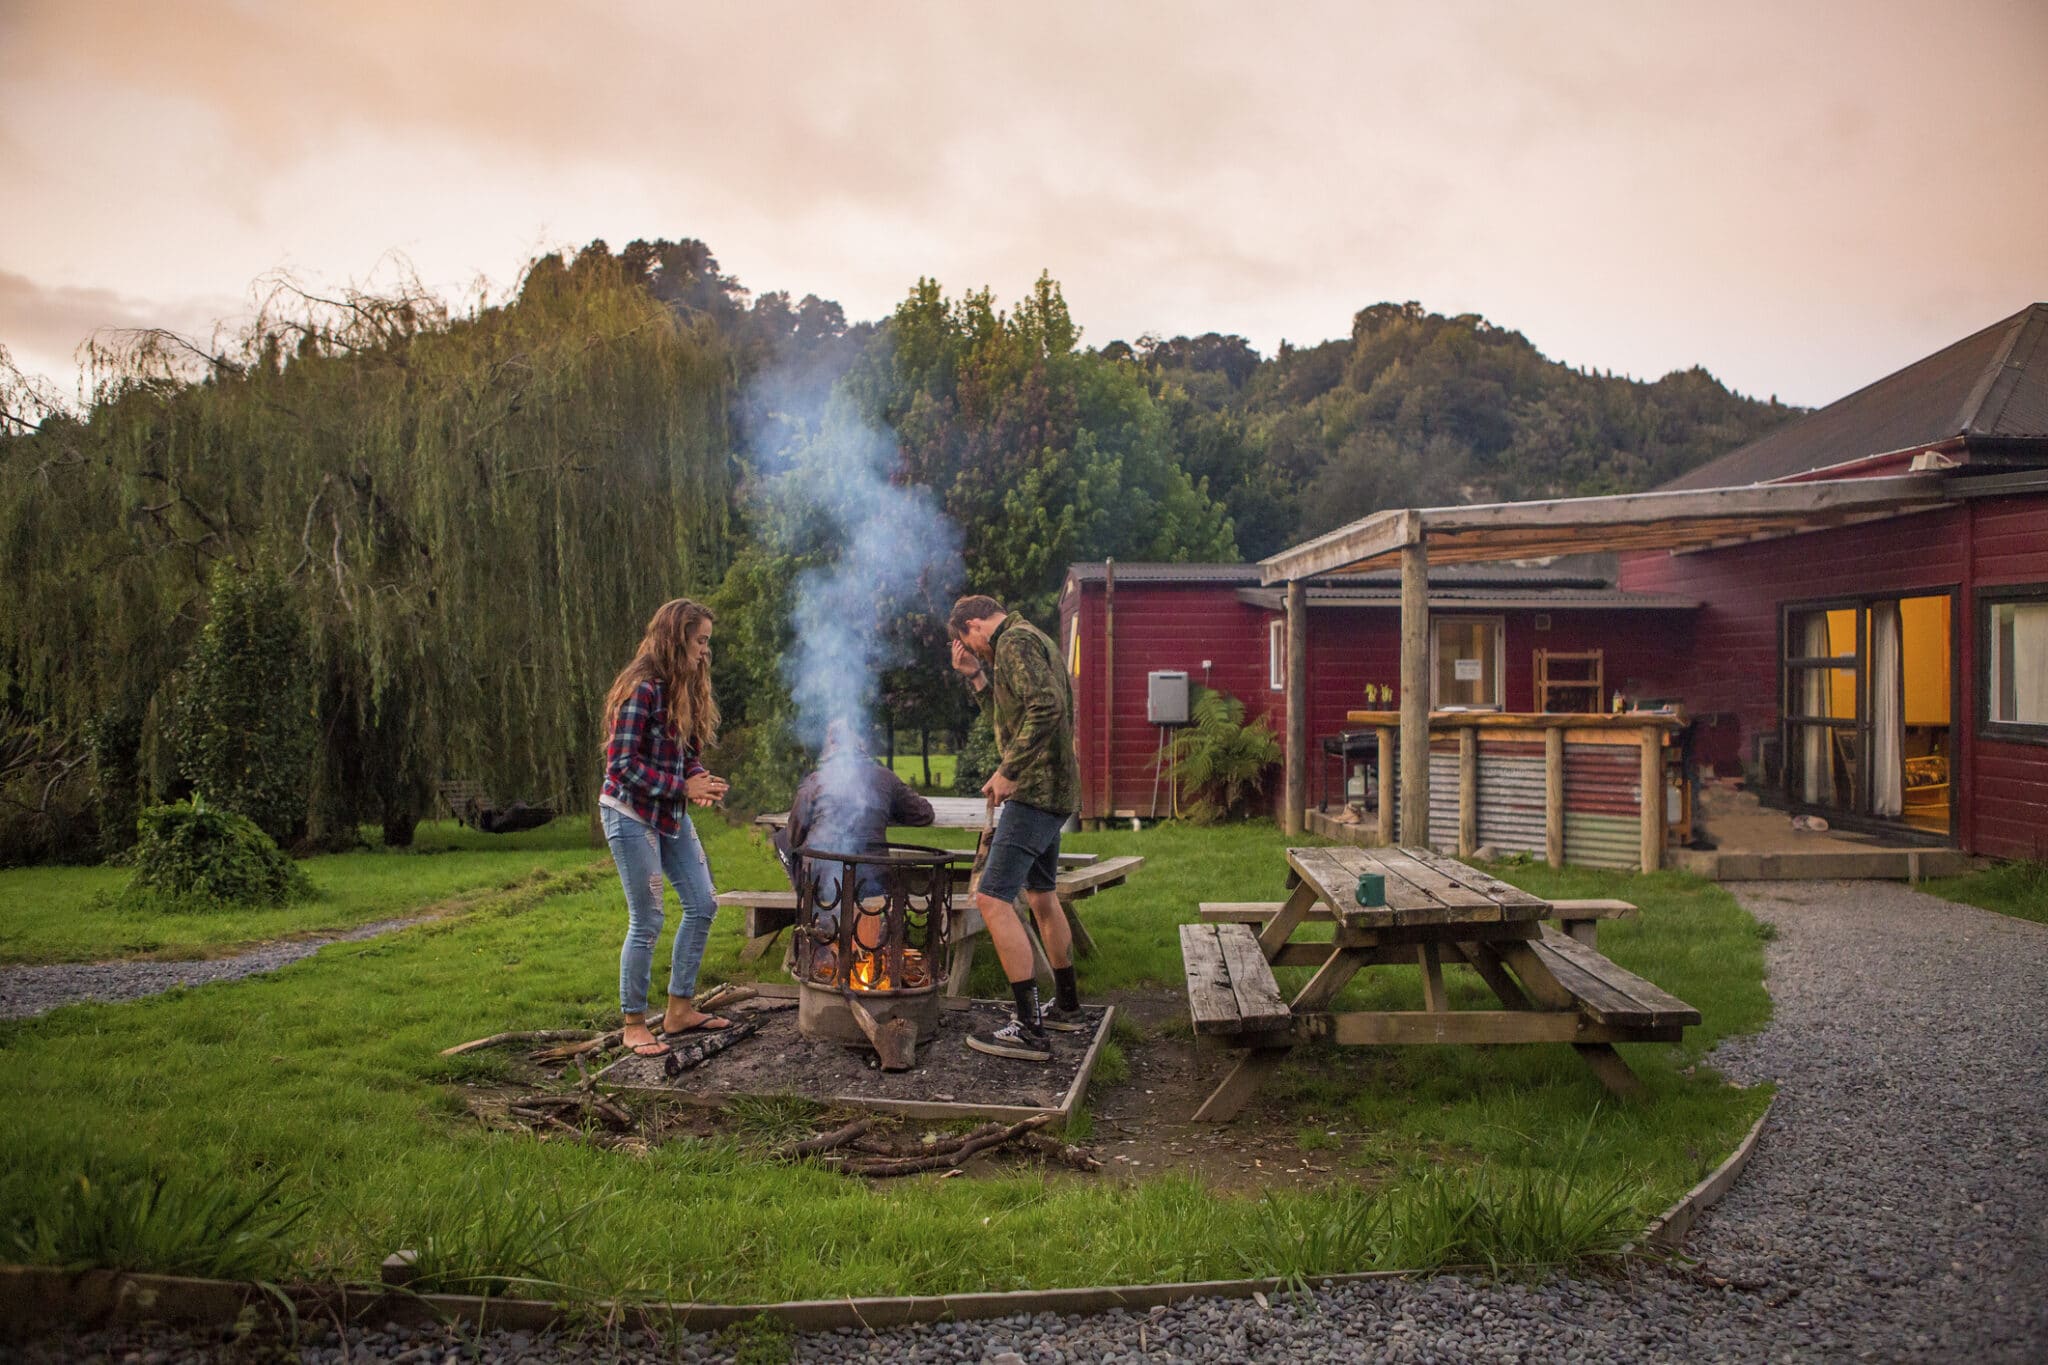 A couple starts a bonfire at the campsite.